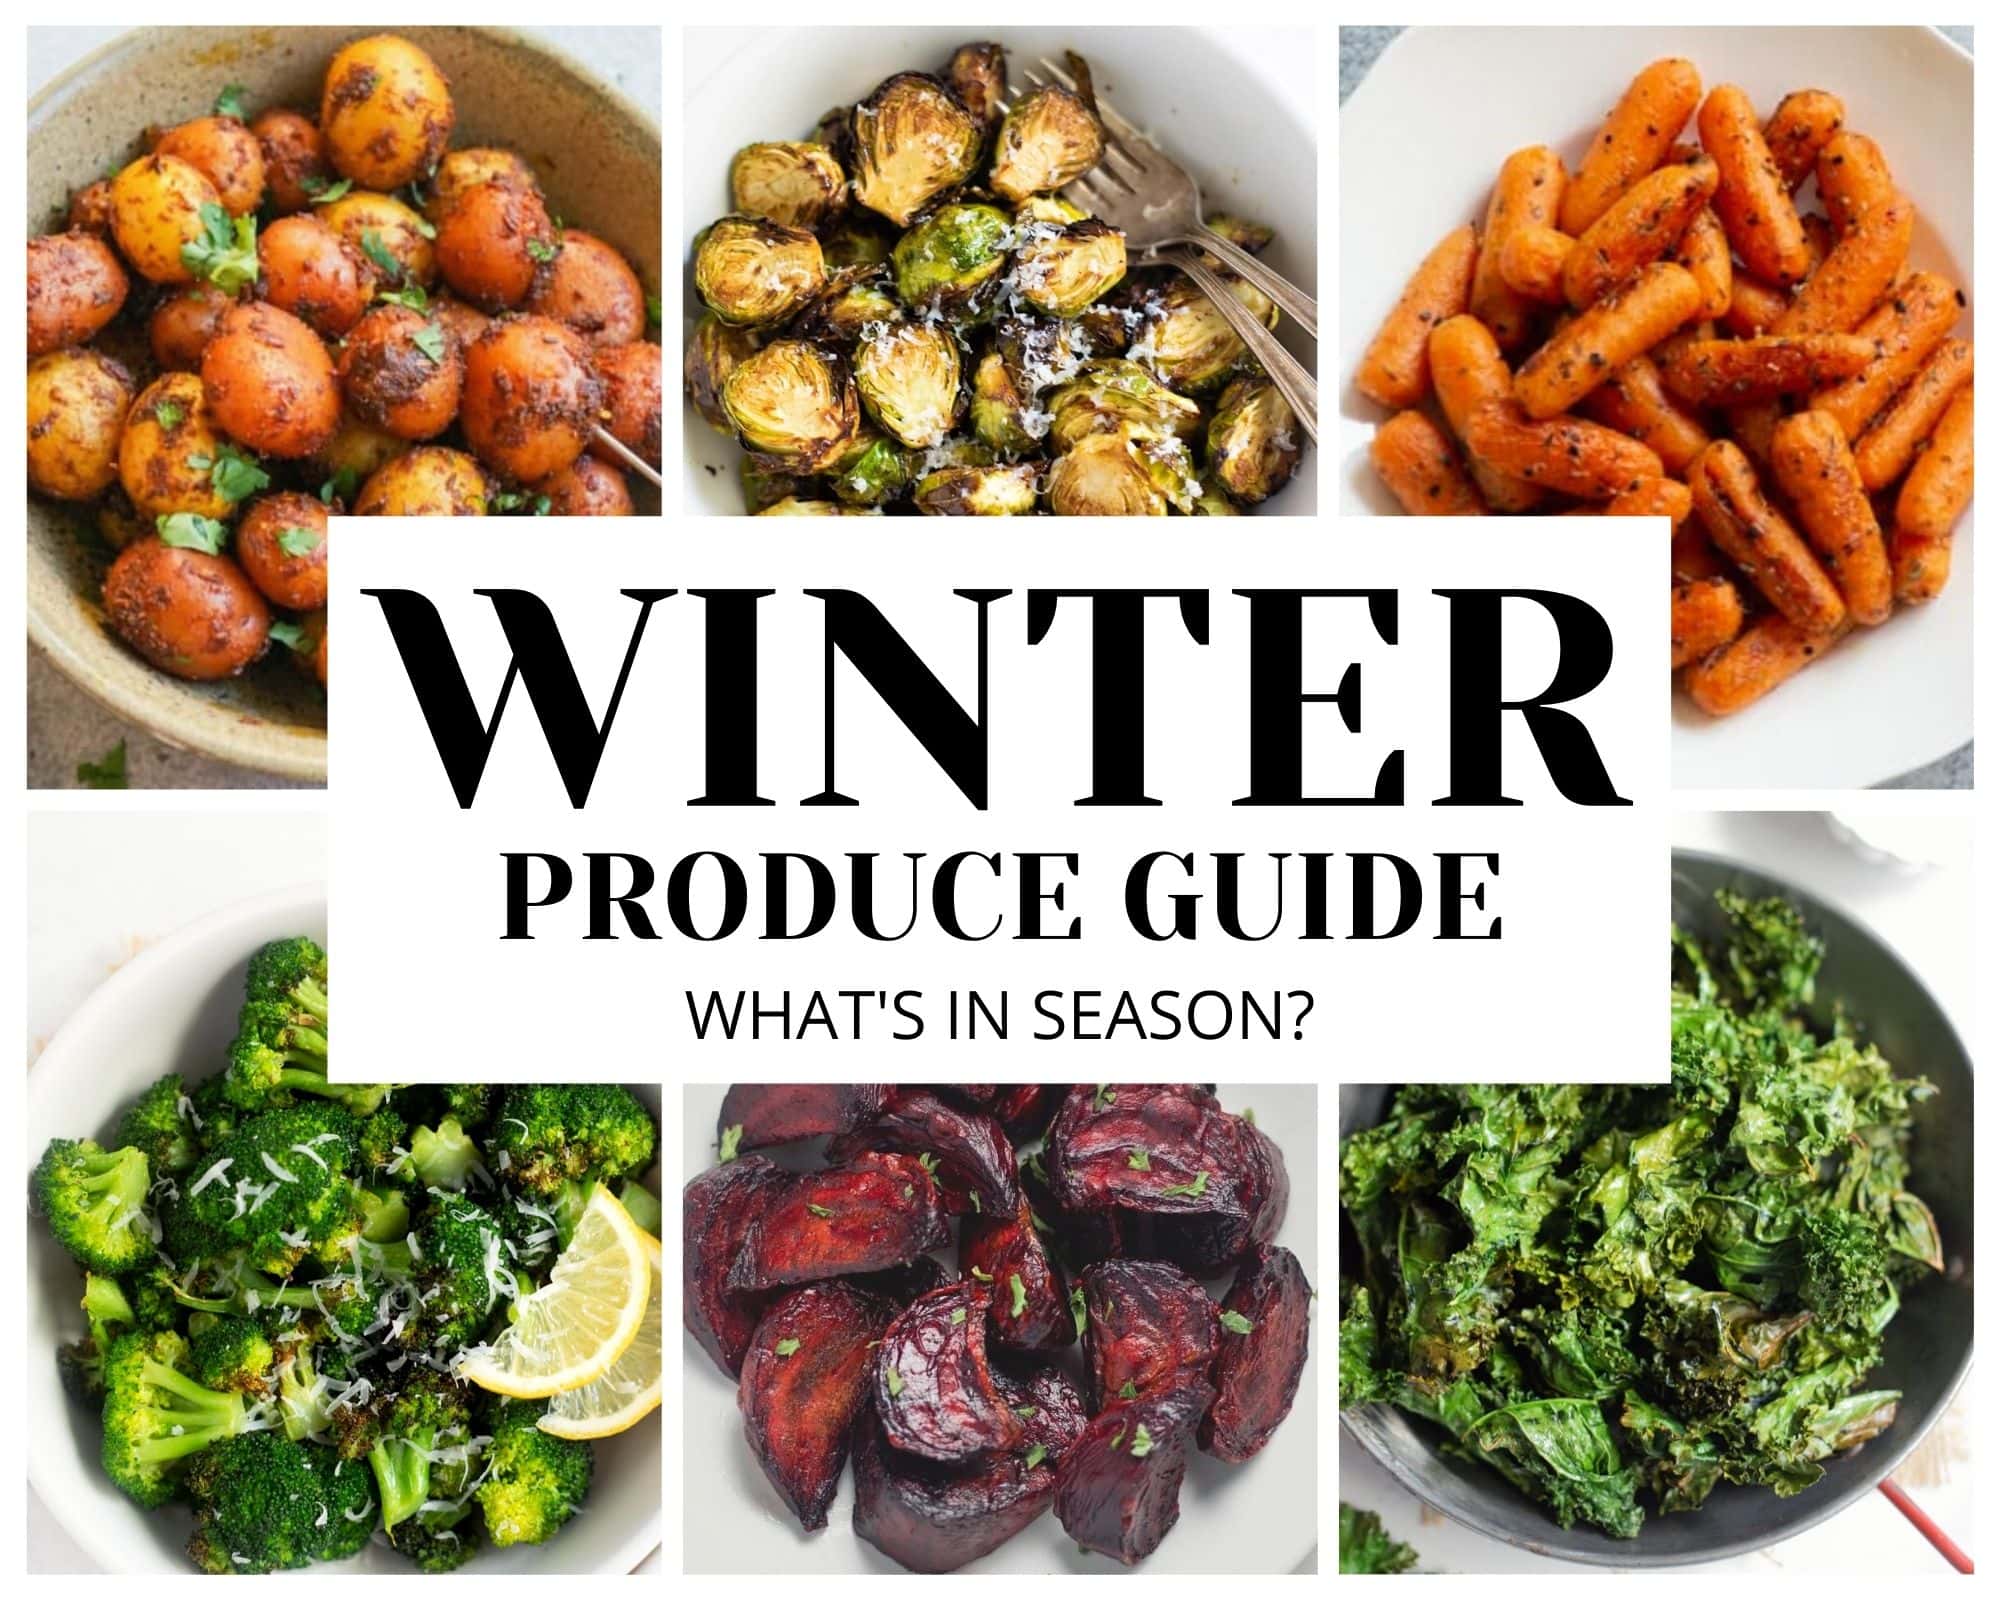 Fruits and Vegetables in Season in December - Seasonal Produce Guide!